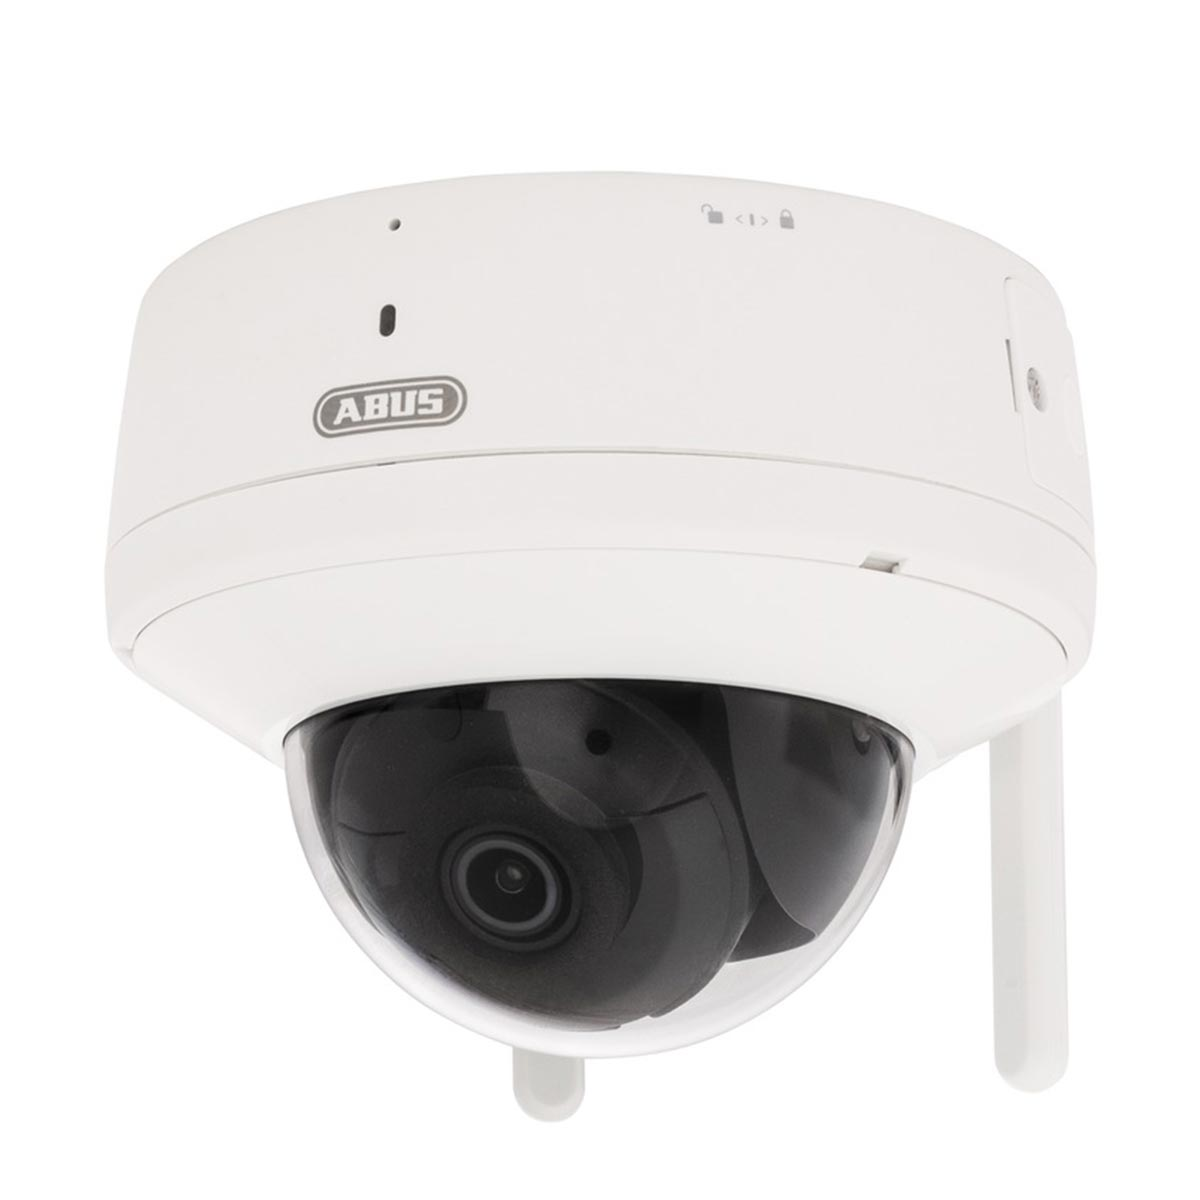 Netzwerk-Überwachungskamera ABUS TVIP42562, ABUS